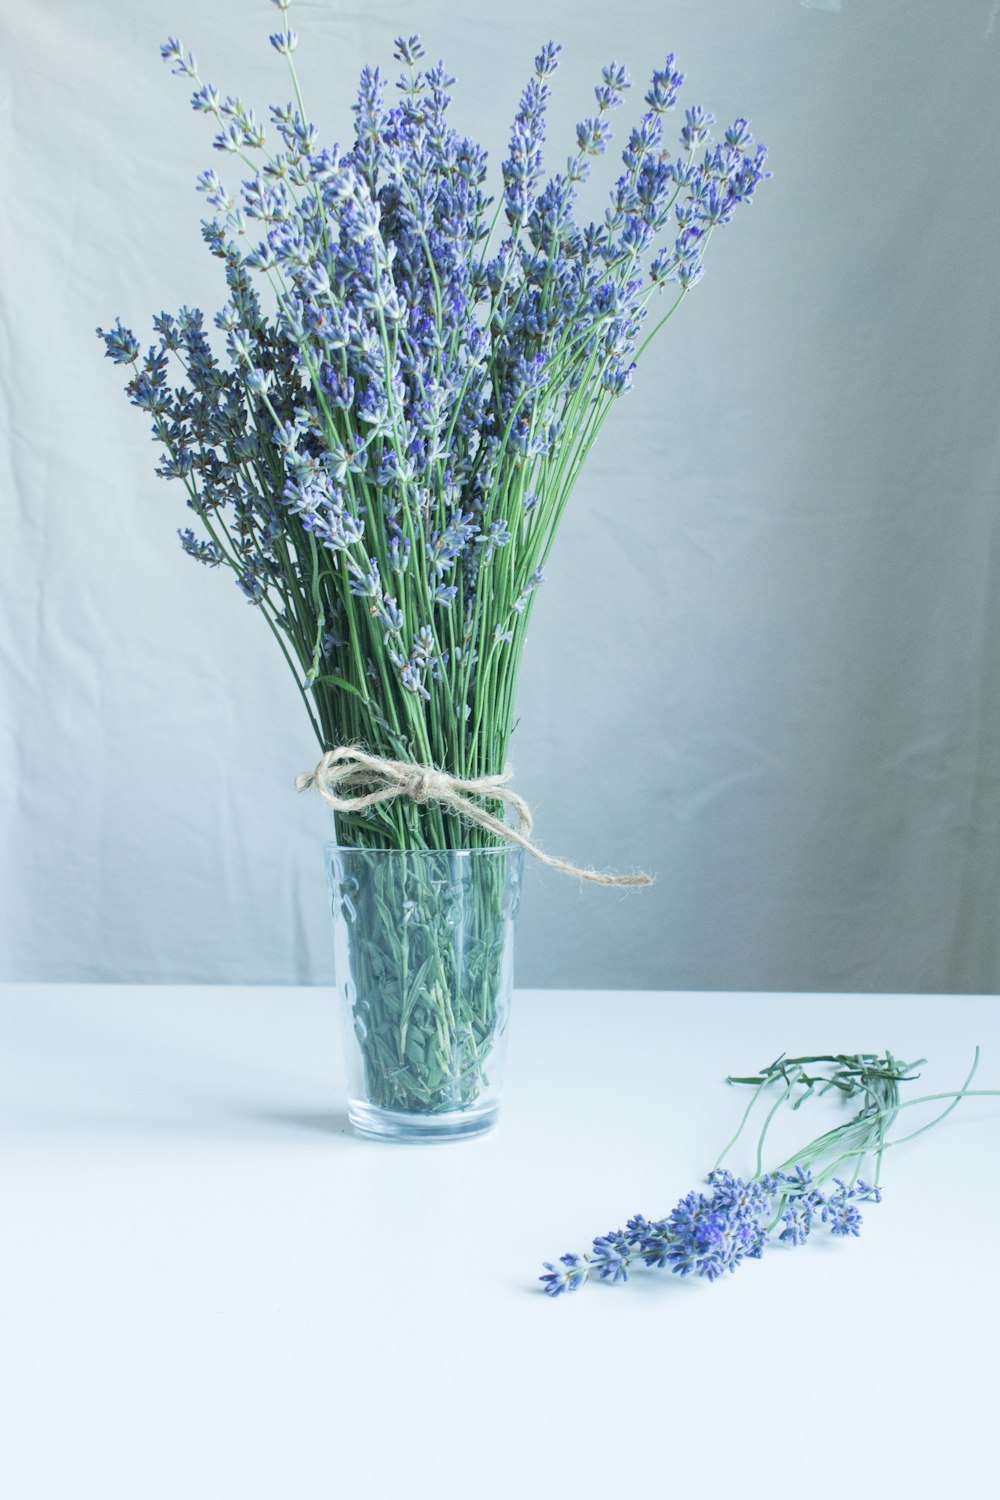 purple flowers in clear glass vase